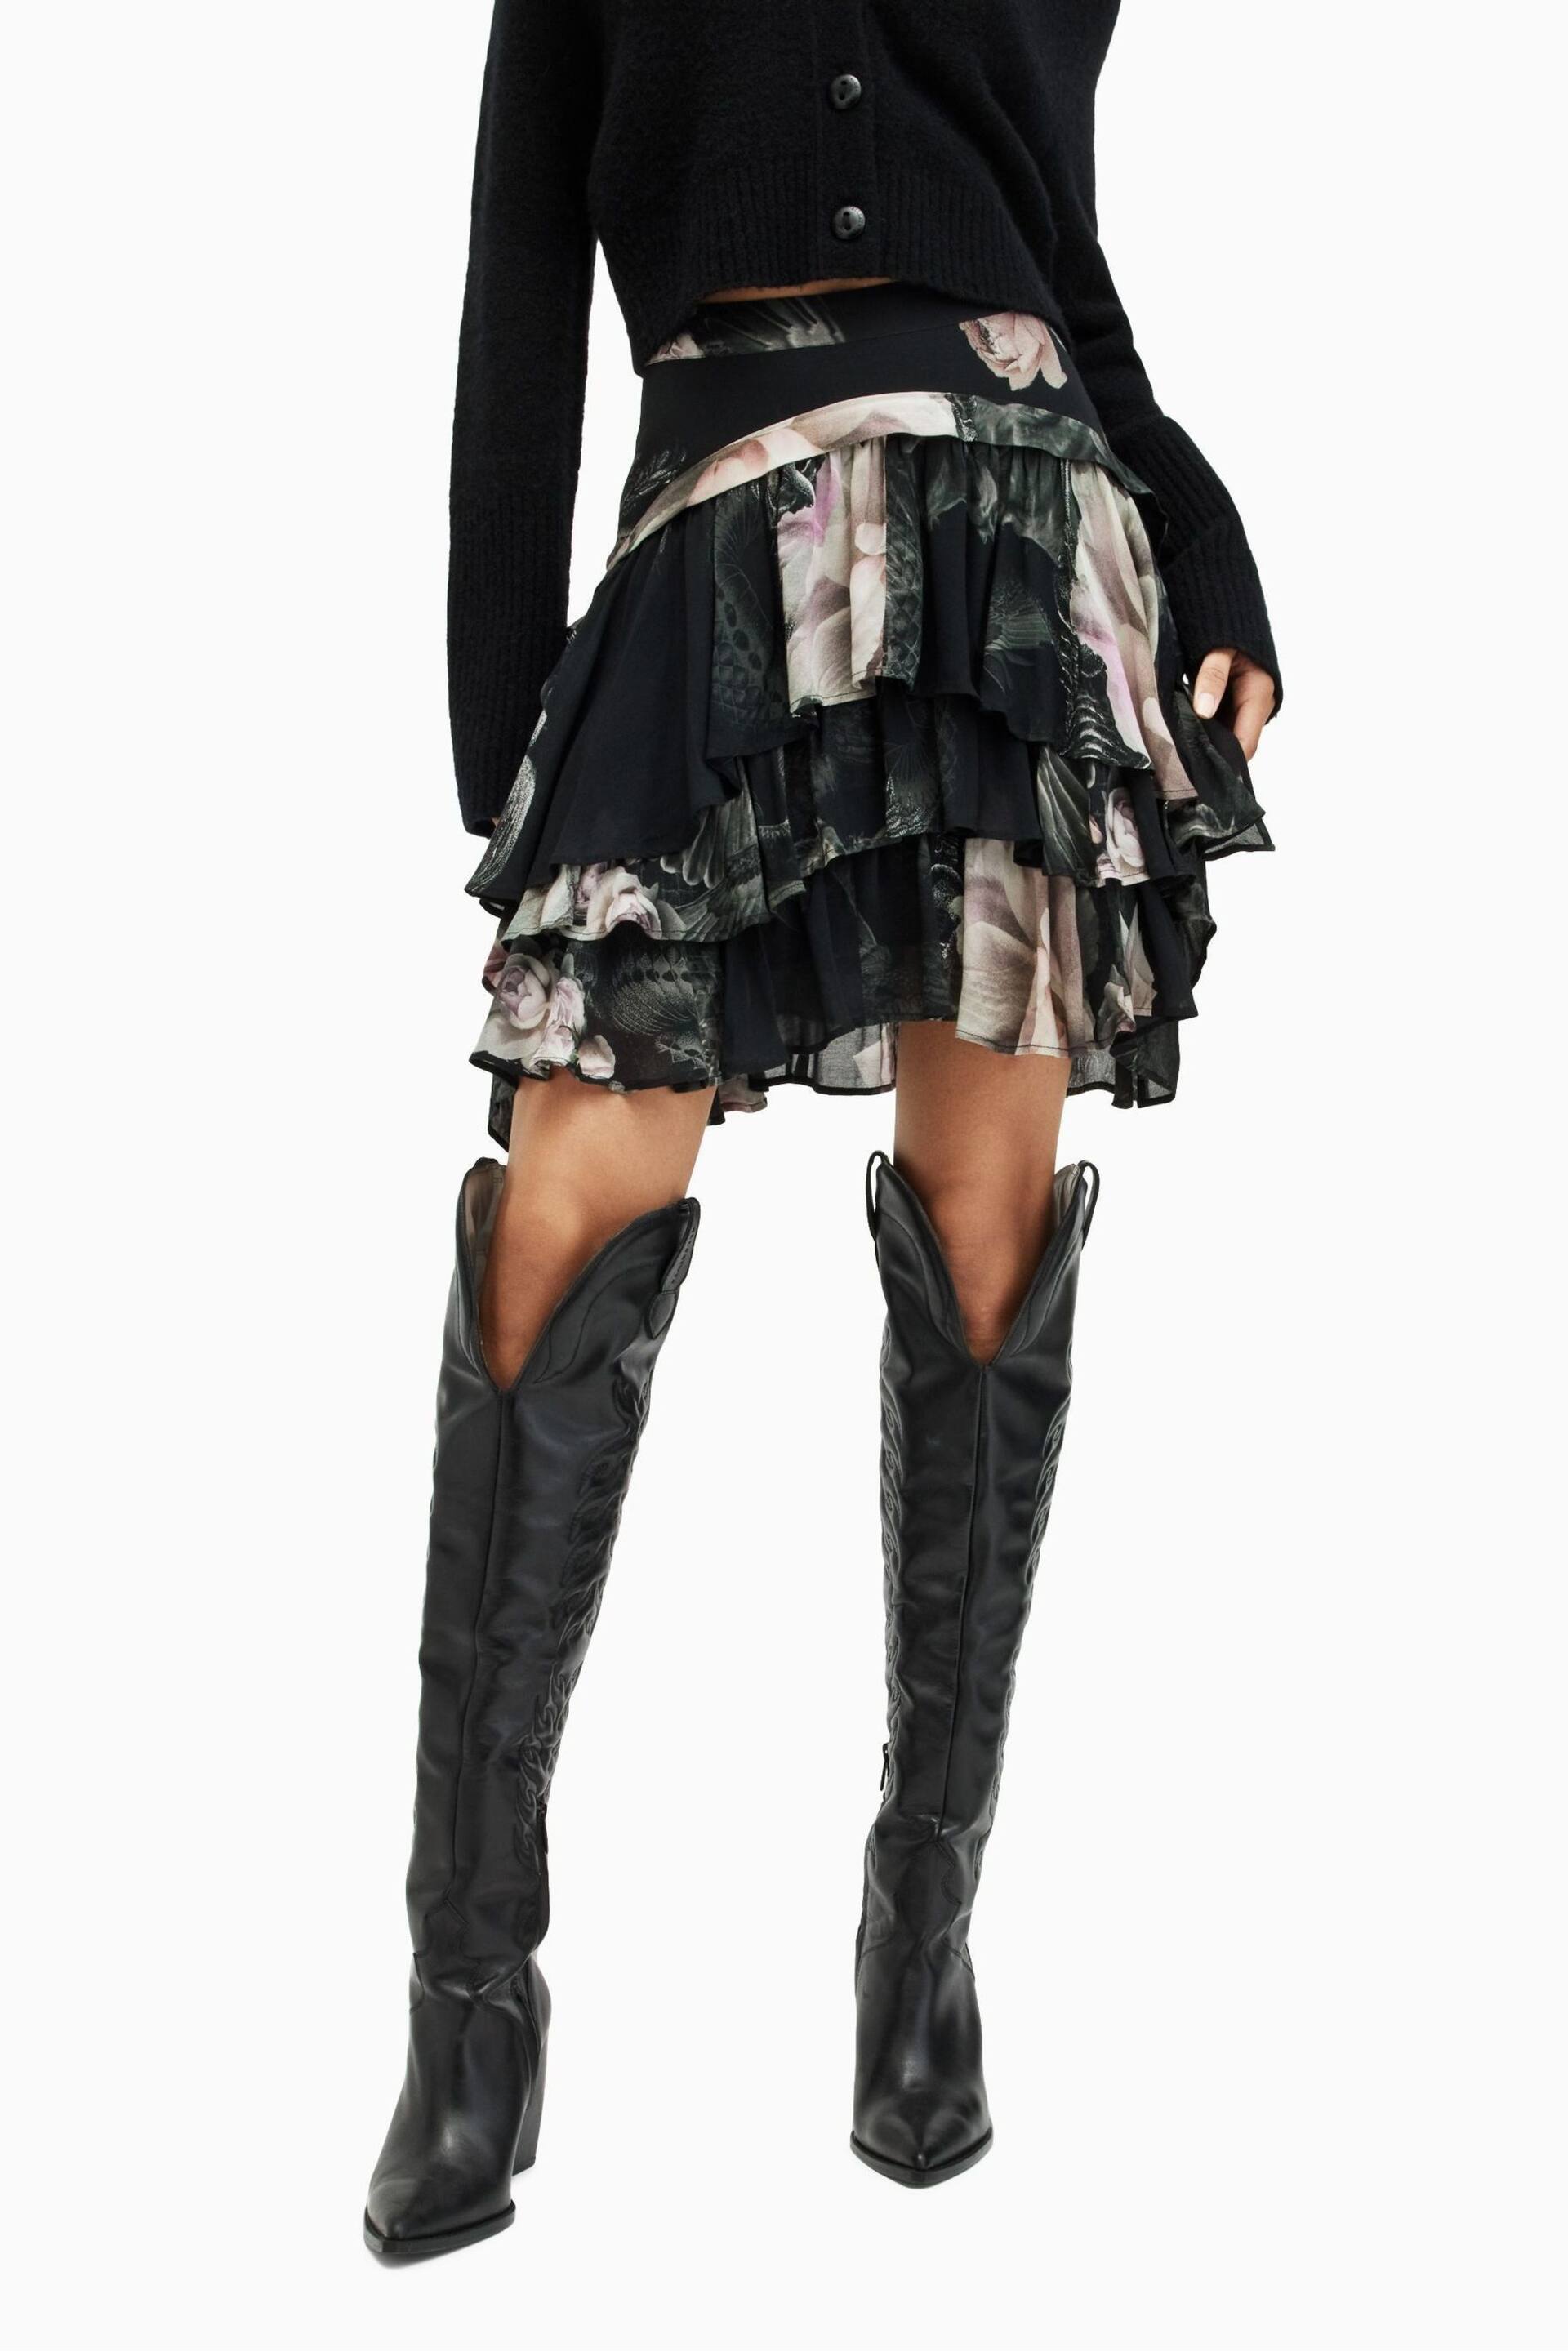 AllSaints Black Cavarly Valley Skirt - Image 1 of 6